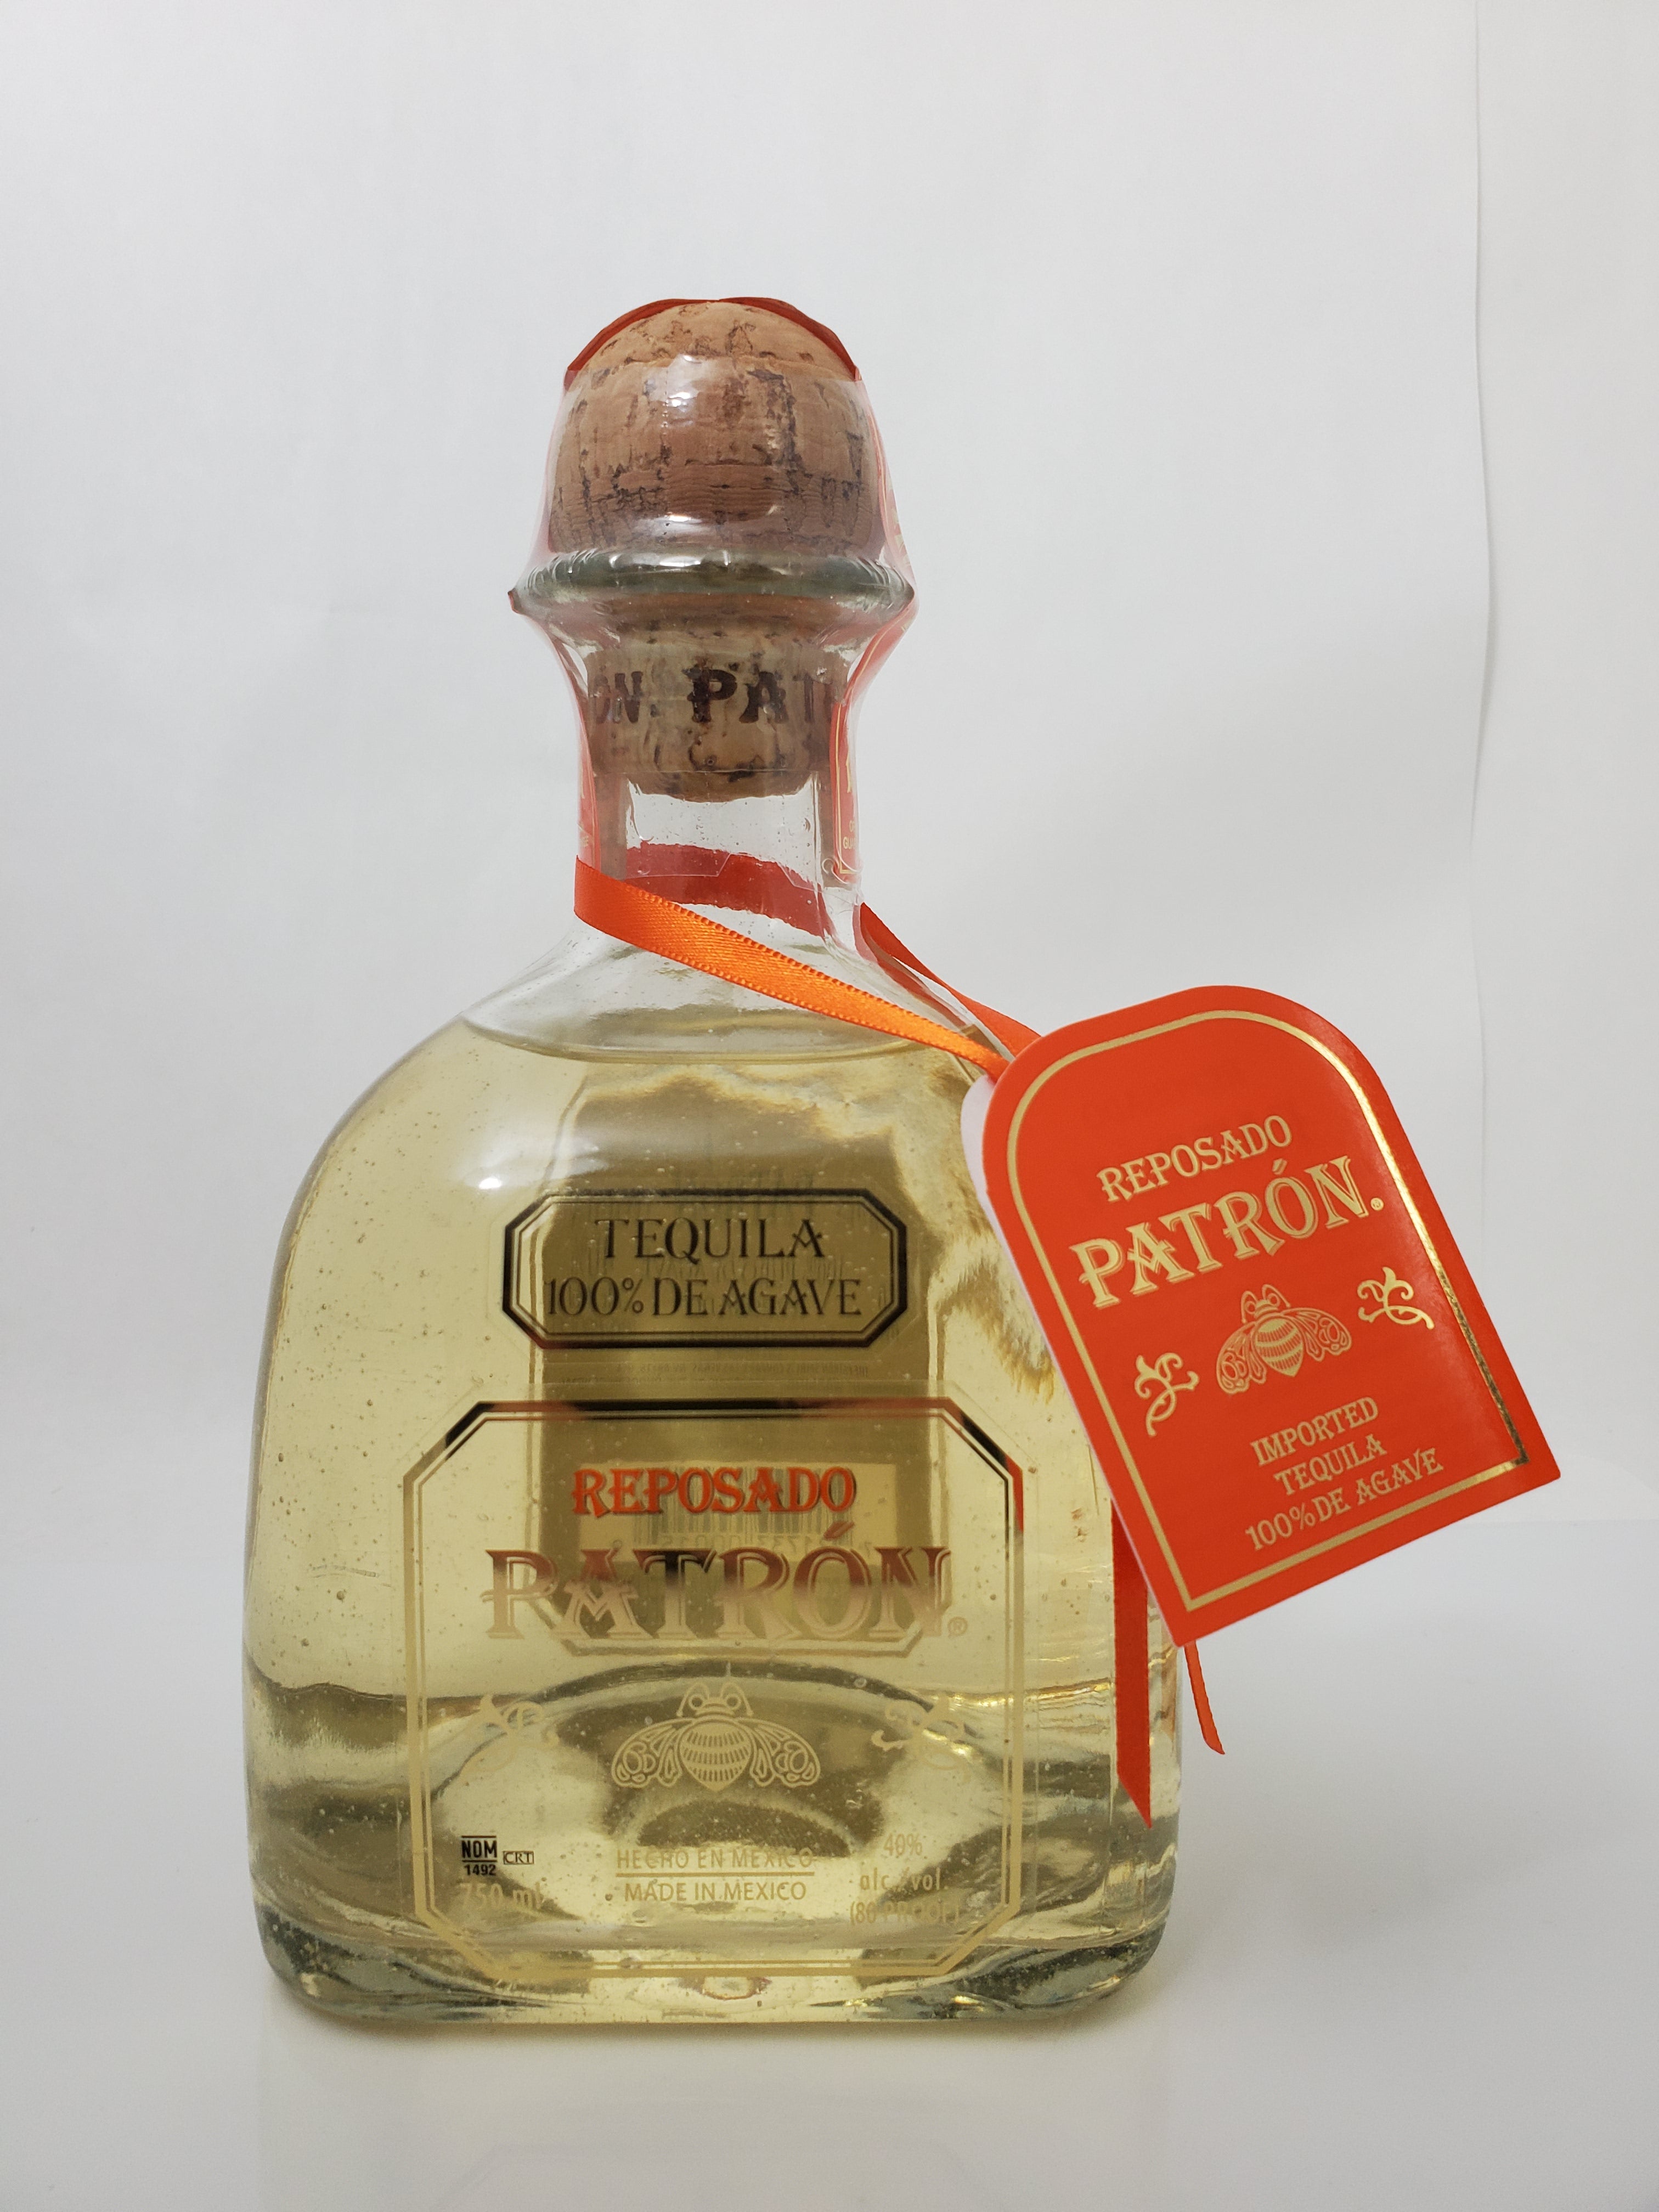 Patron Reposado Tequila 750 ml